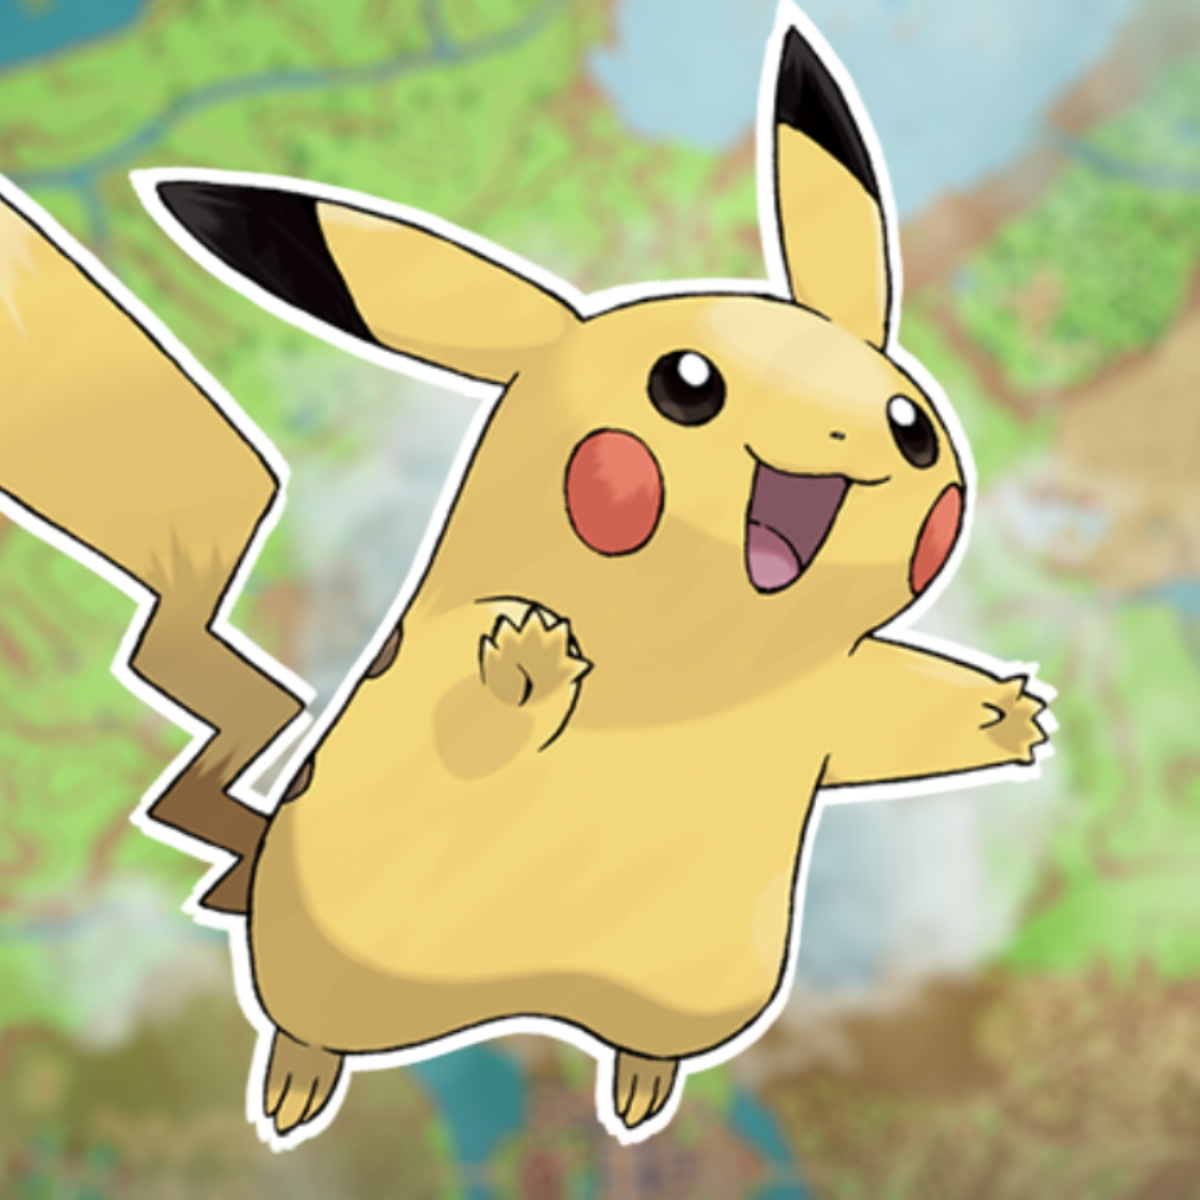 Pikachu Pokémon: How to catch, Moves, Evolutions & More